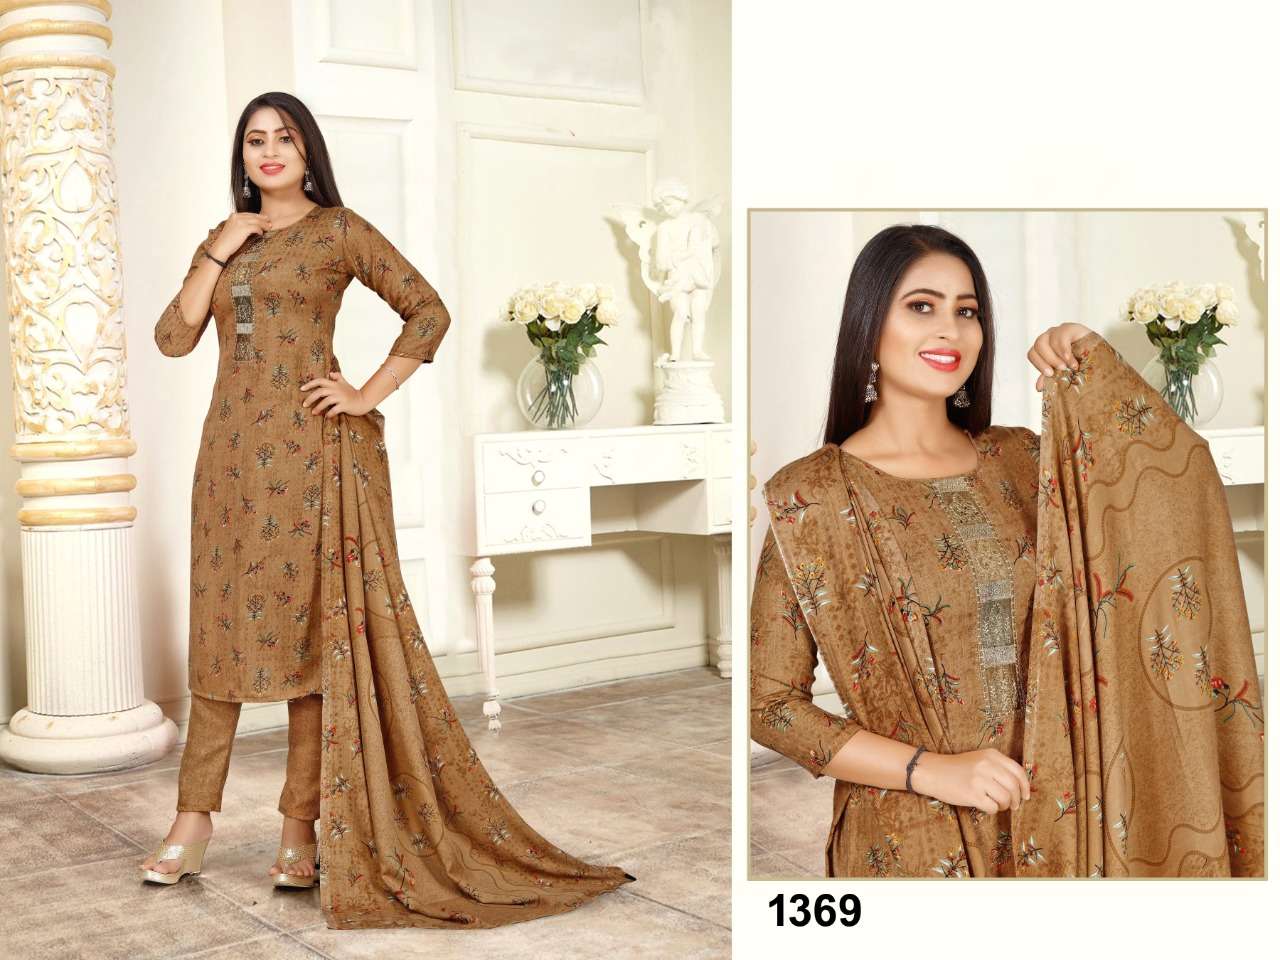 nazneen heer 1366-1369 series indian designer pashmina salwar suits wholesaler surat